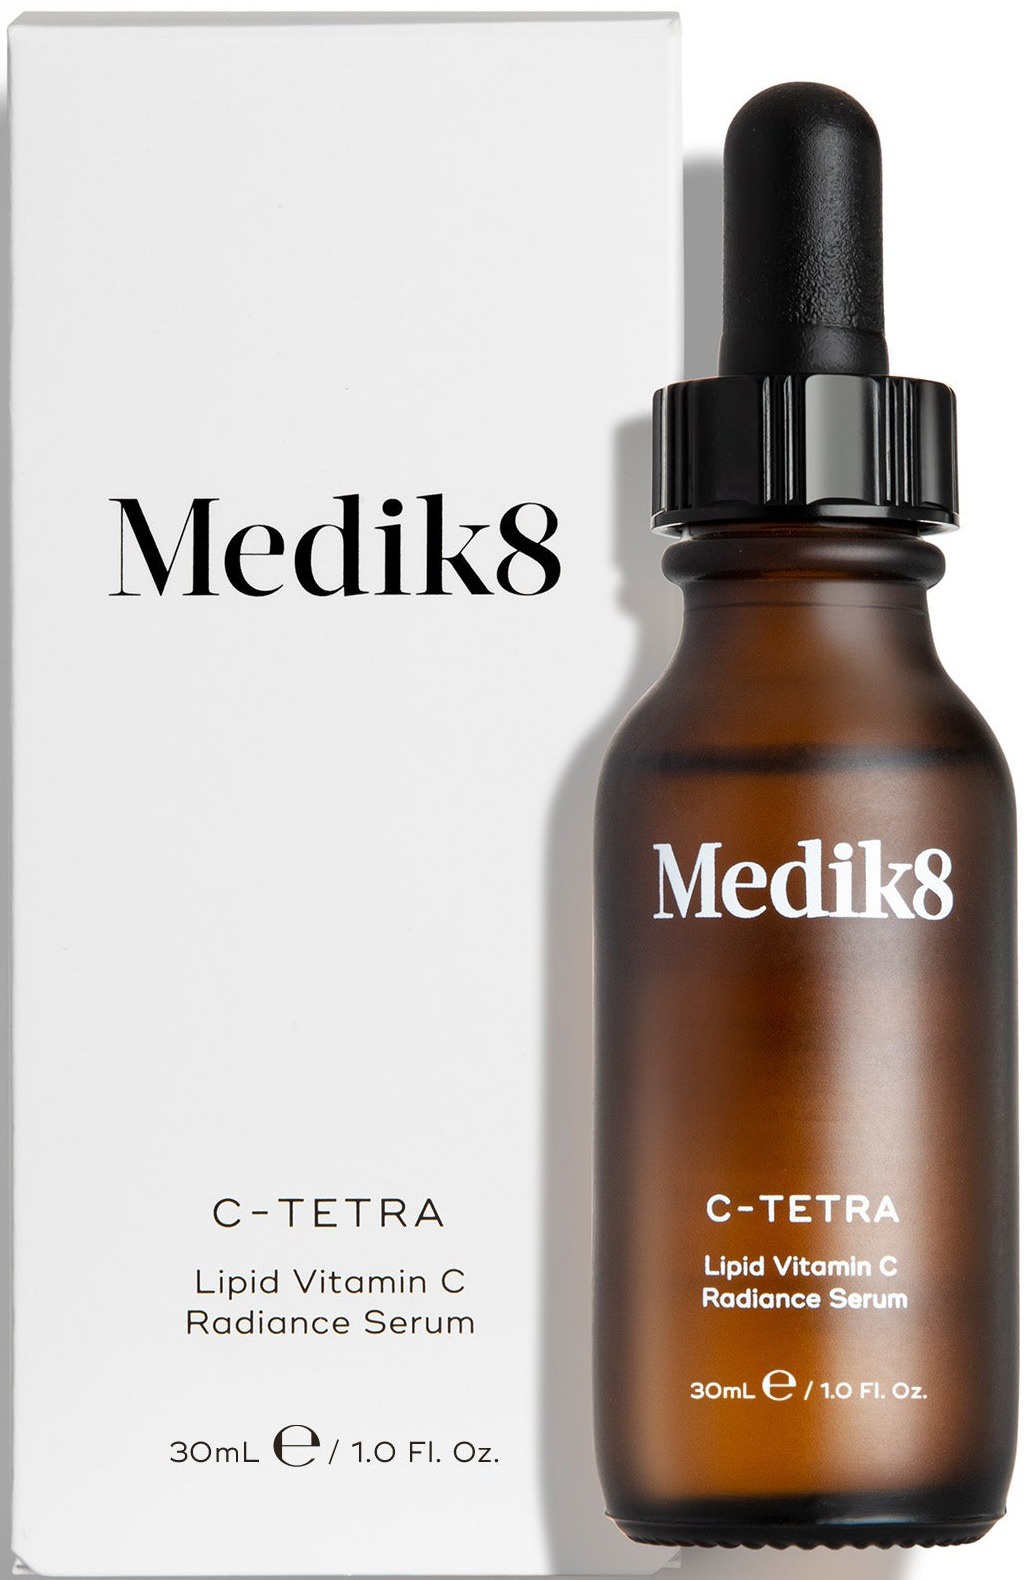 Medik8 C-tetra Lipid Vitamin C Radiance Serum